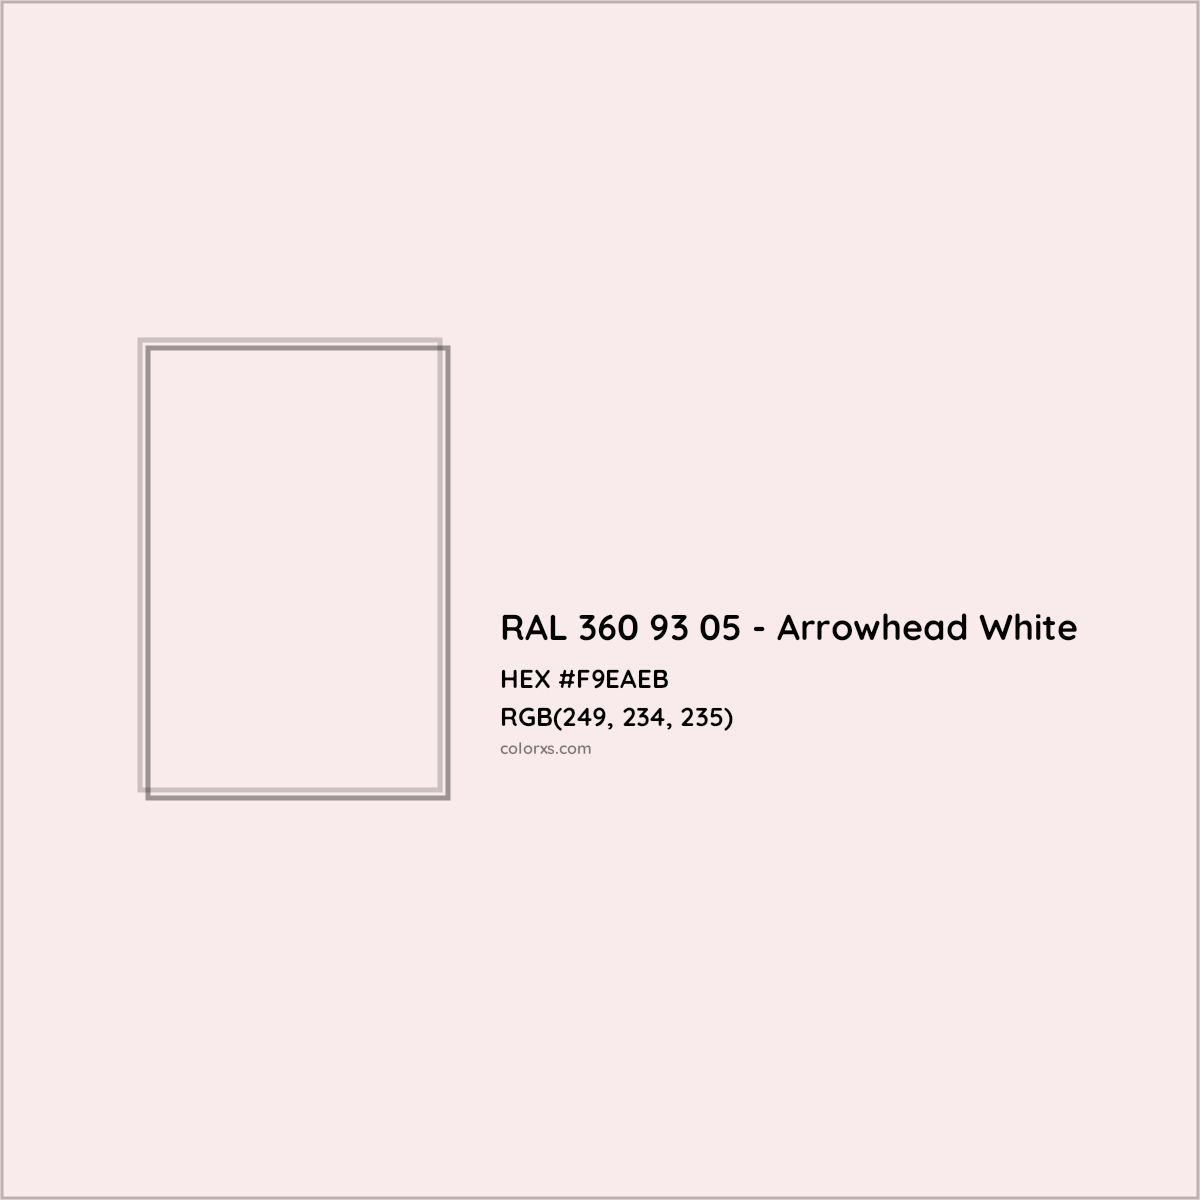 HEX #F9EAEB RAL 360 93 05 - Arrowhead White CMS RAL Design - Color Code